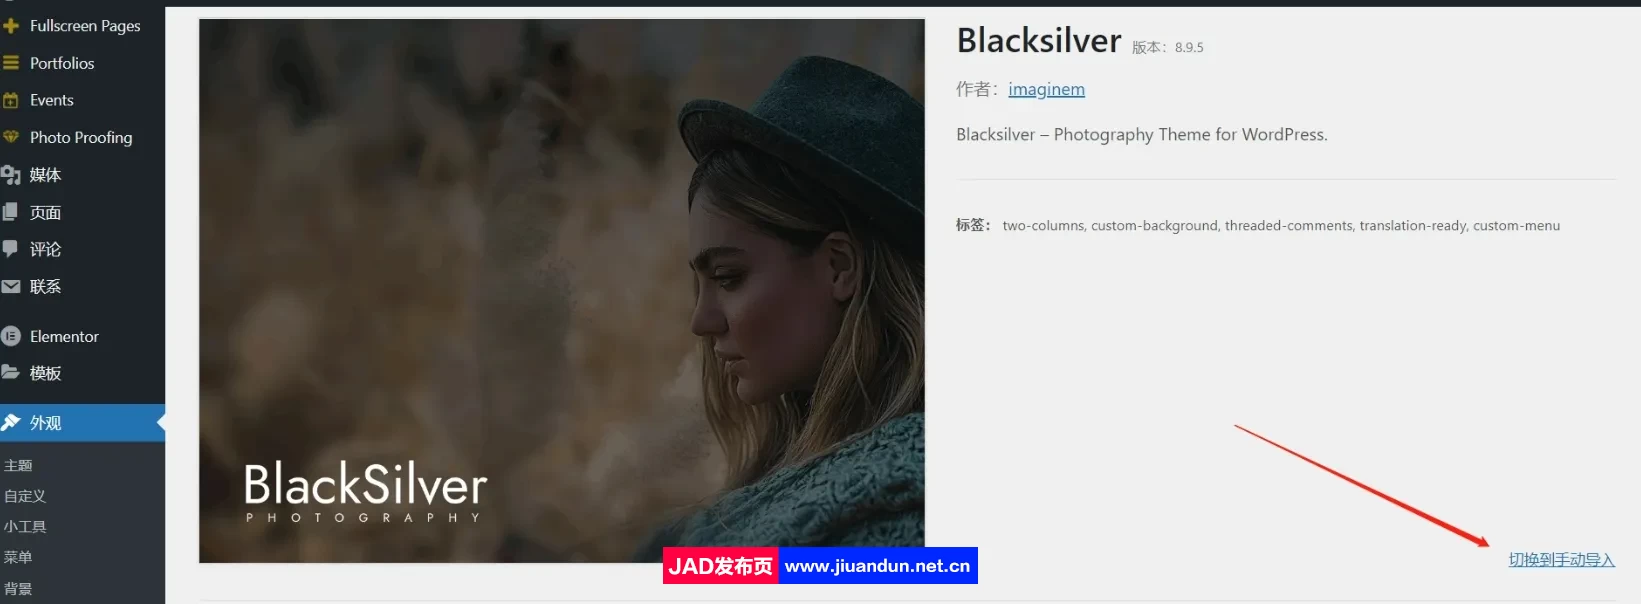 Blacksilver主题汉化版– WordPress专业摄影主题+demo演示数据 wordpress主题/插件 第6张